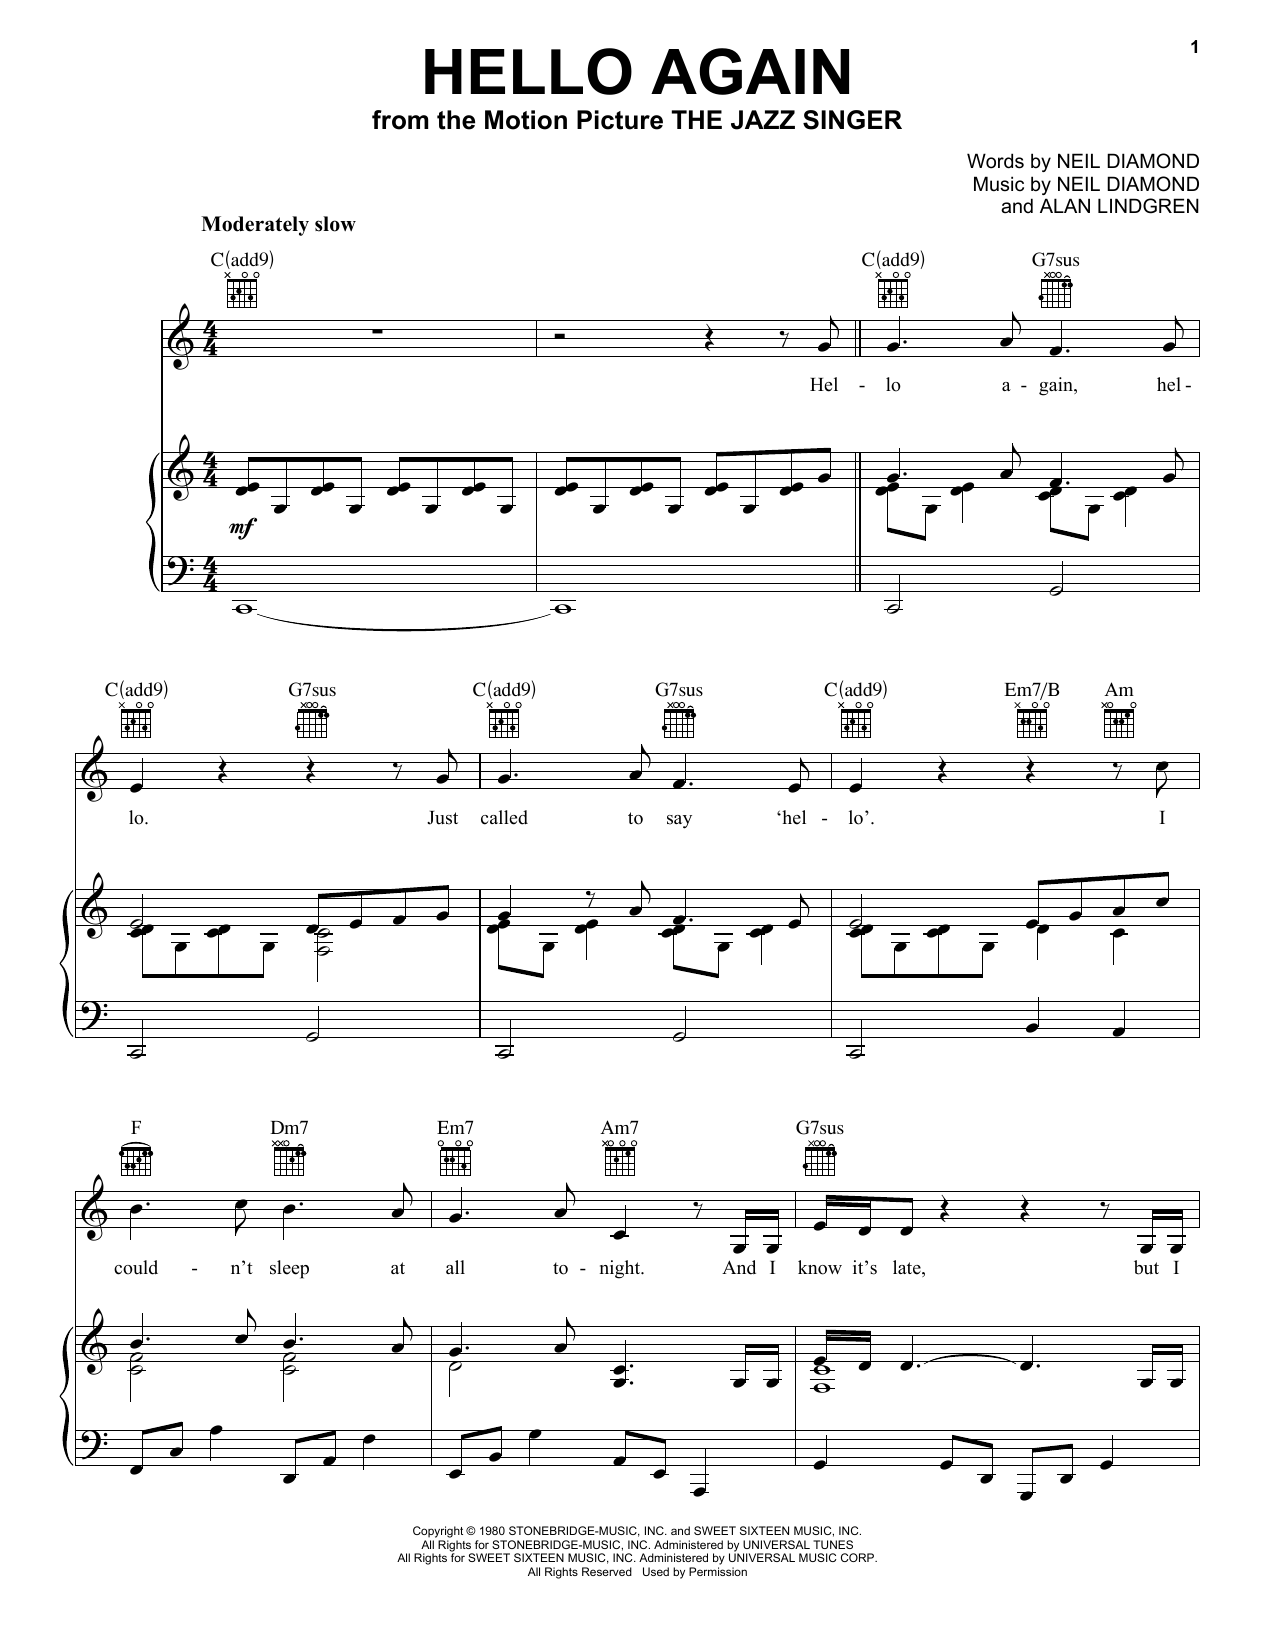 Neil Diamond Hello Again Sheet Music Notes & Chords for Easy Guitar Tab - Download or Print PDF